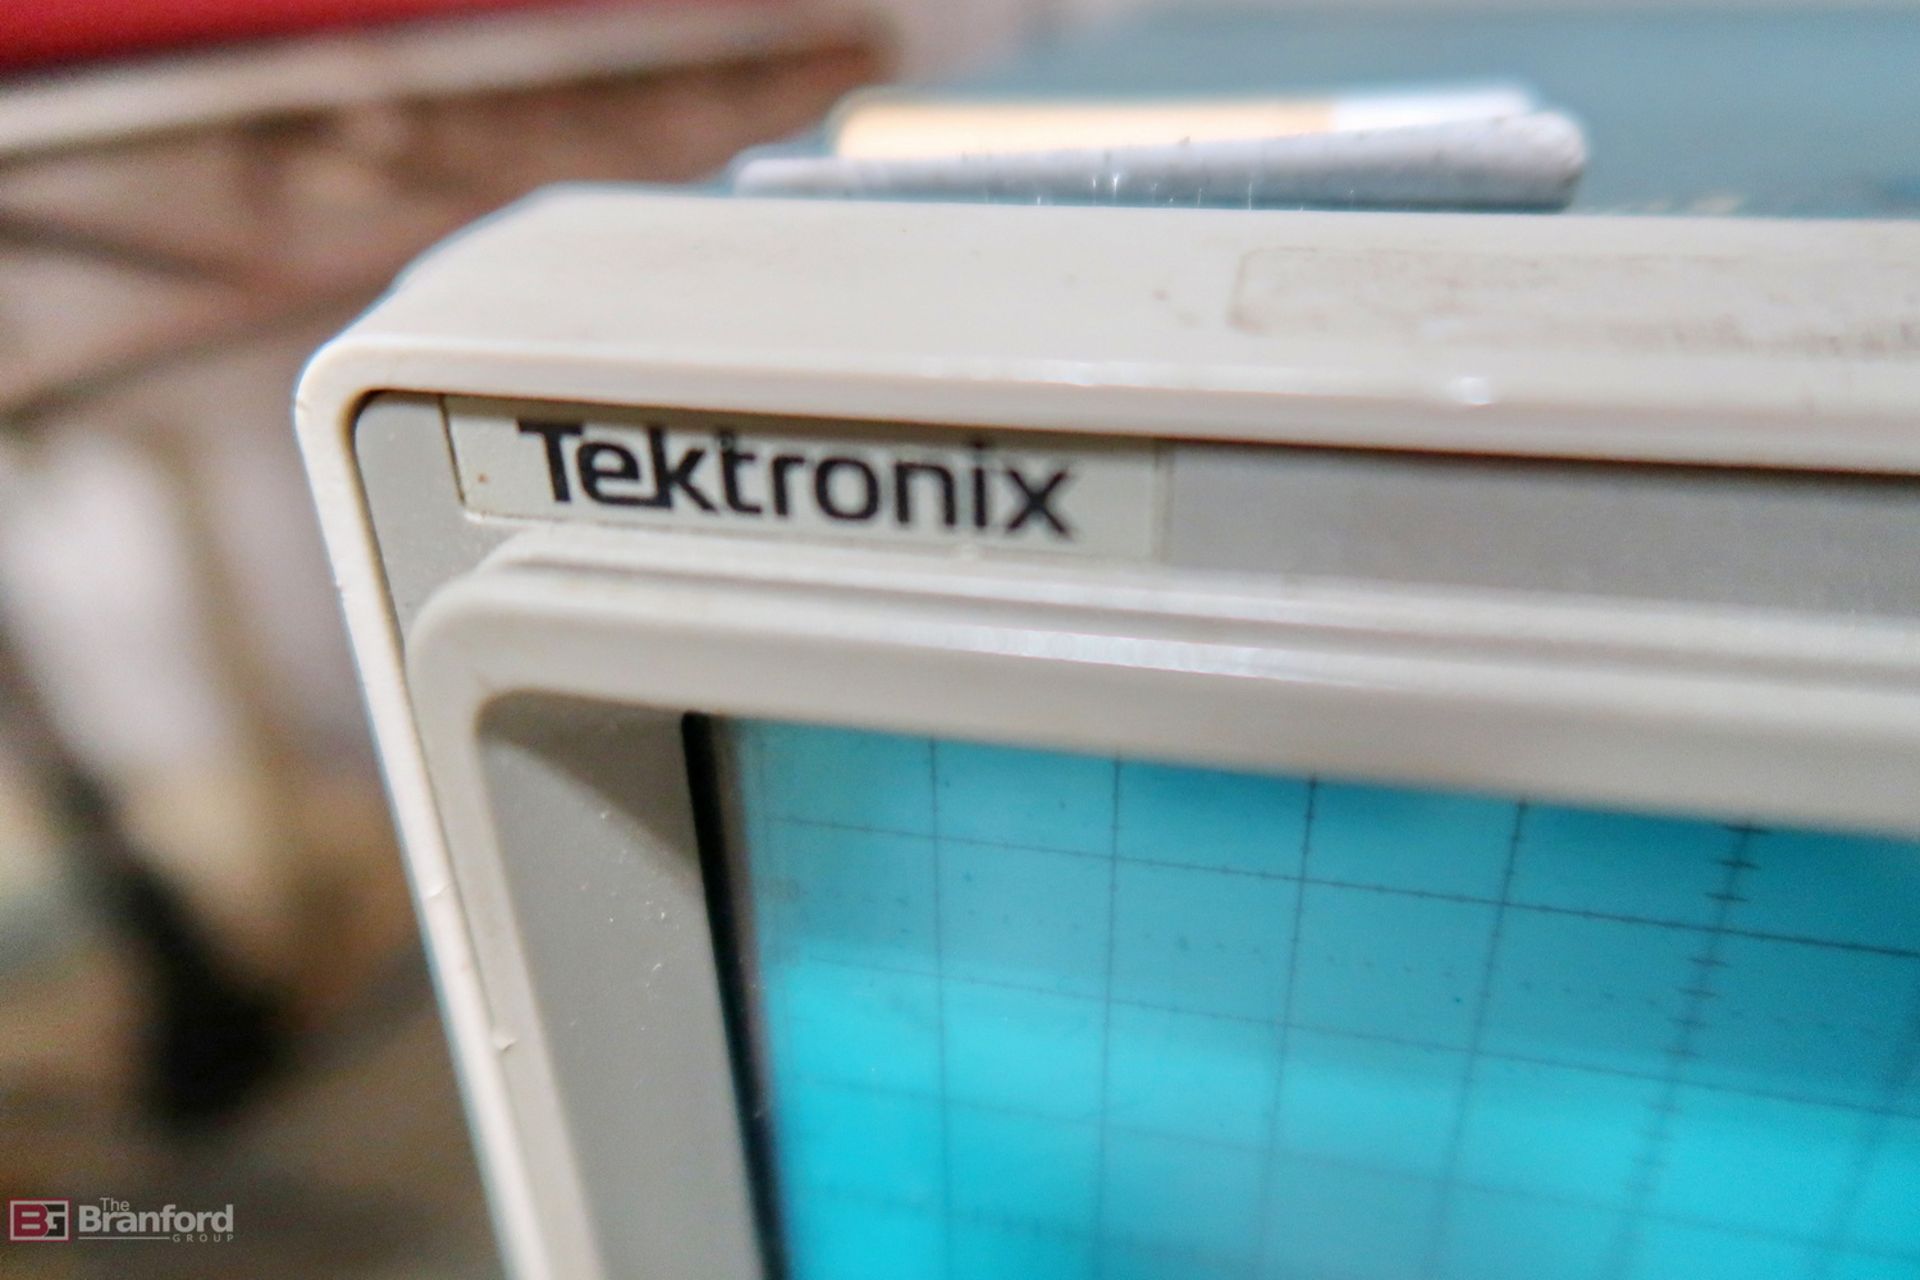 Tektronix 2213 oscilloscope - Image 3 of 3